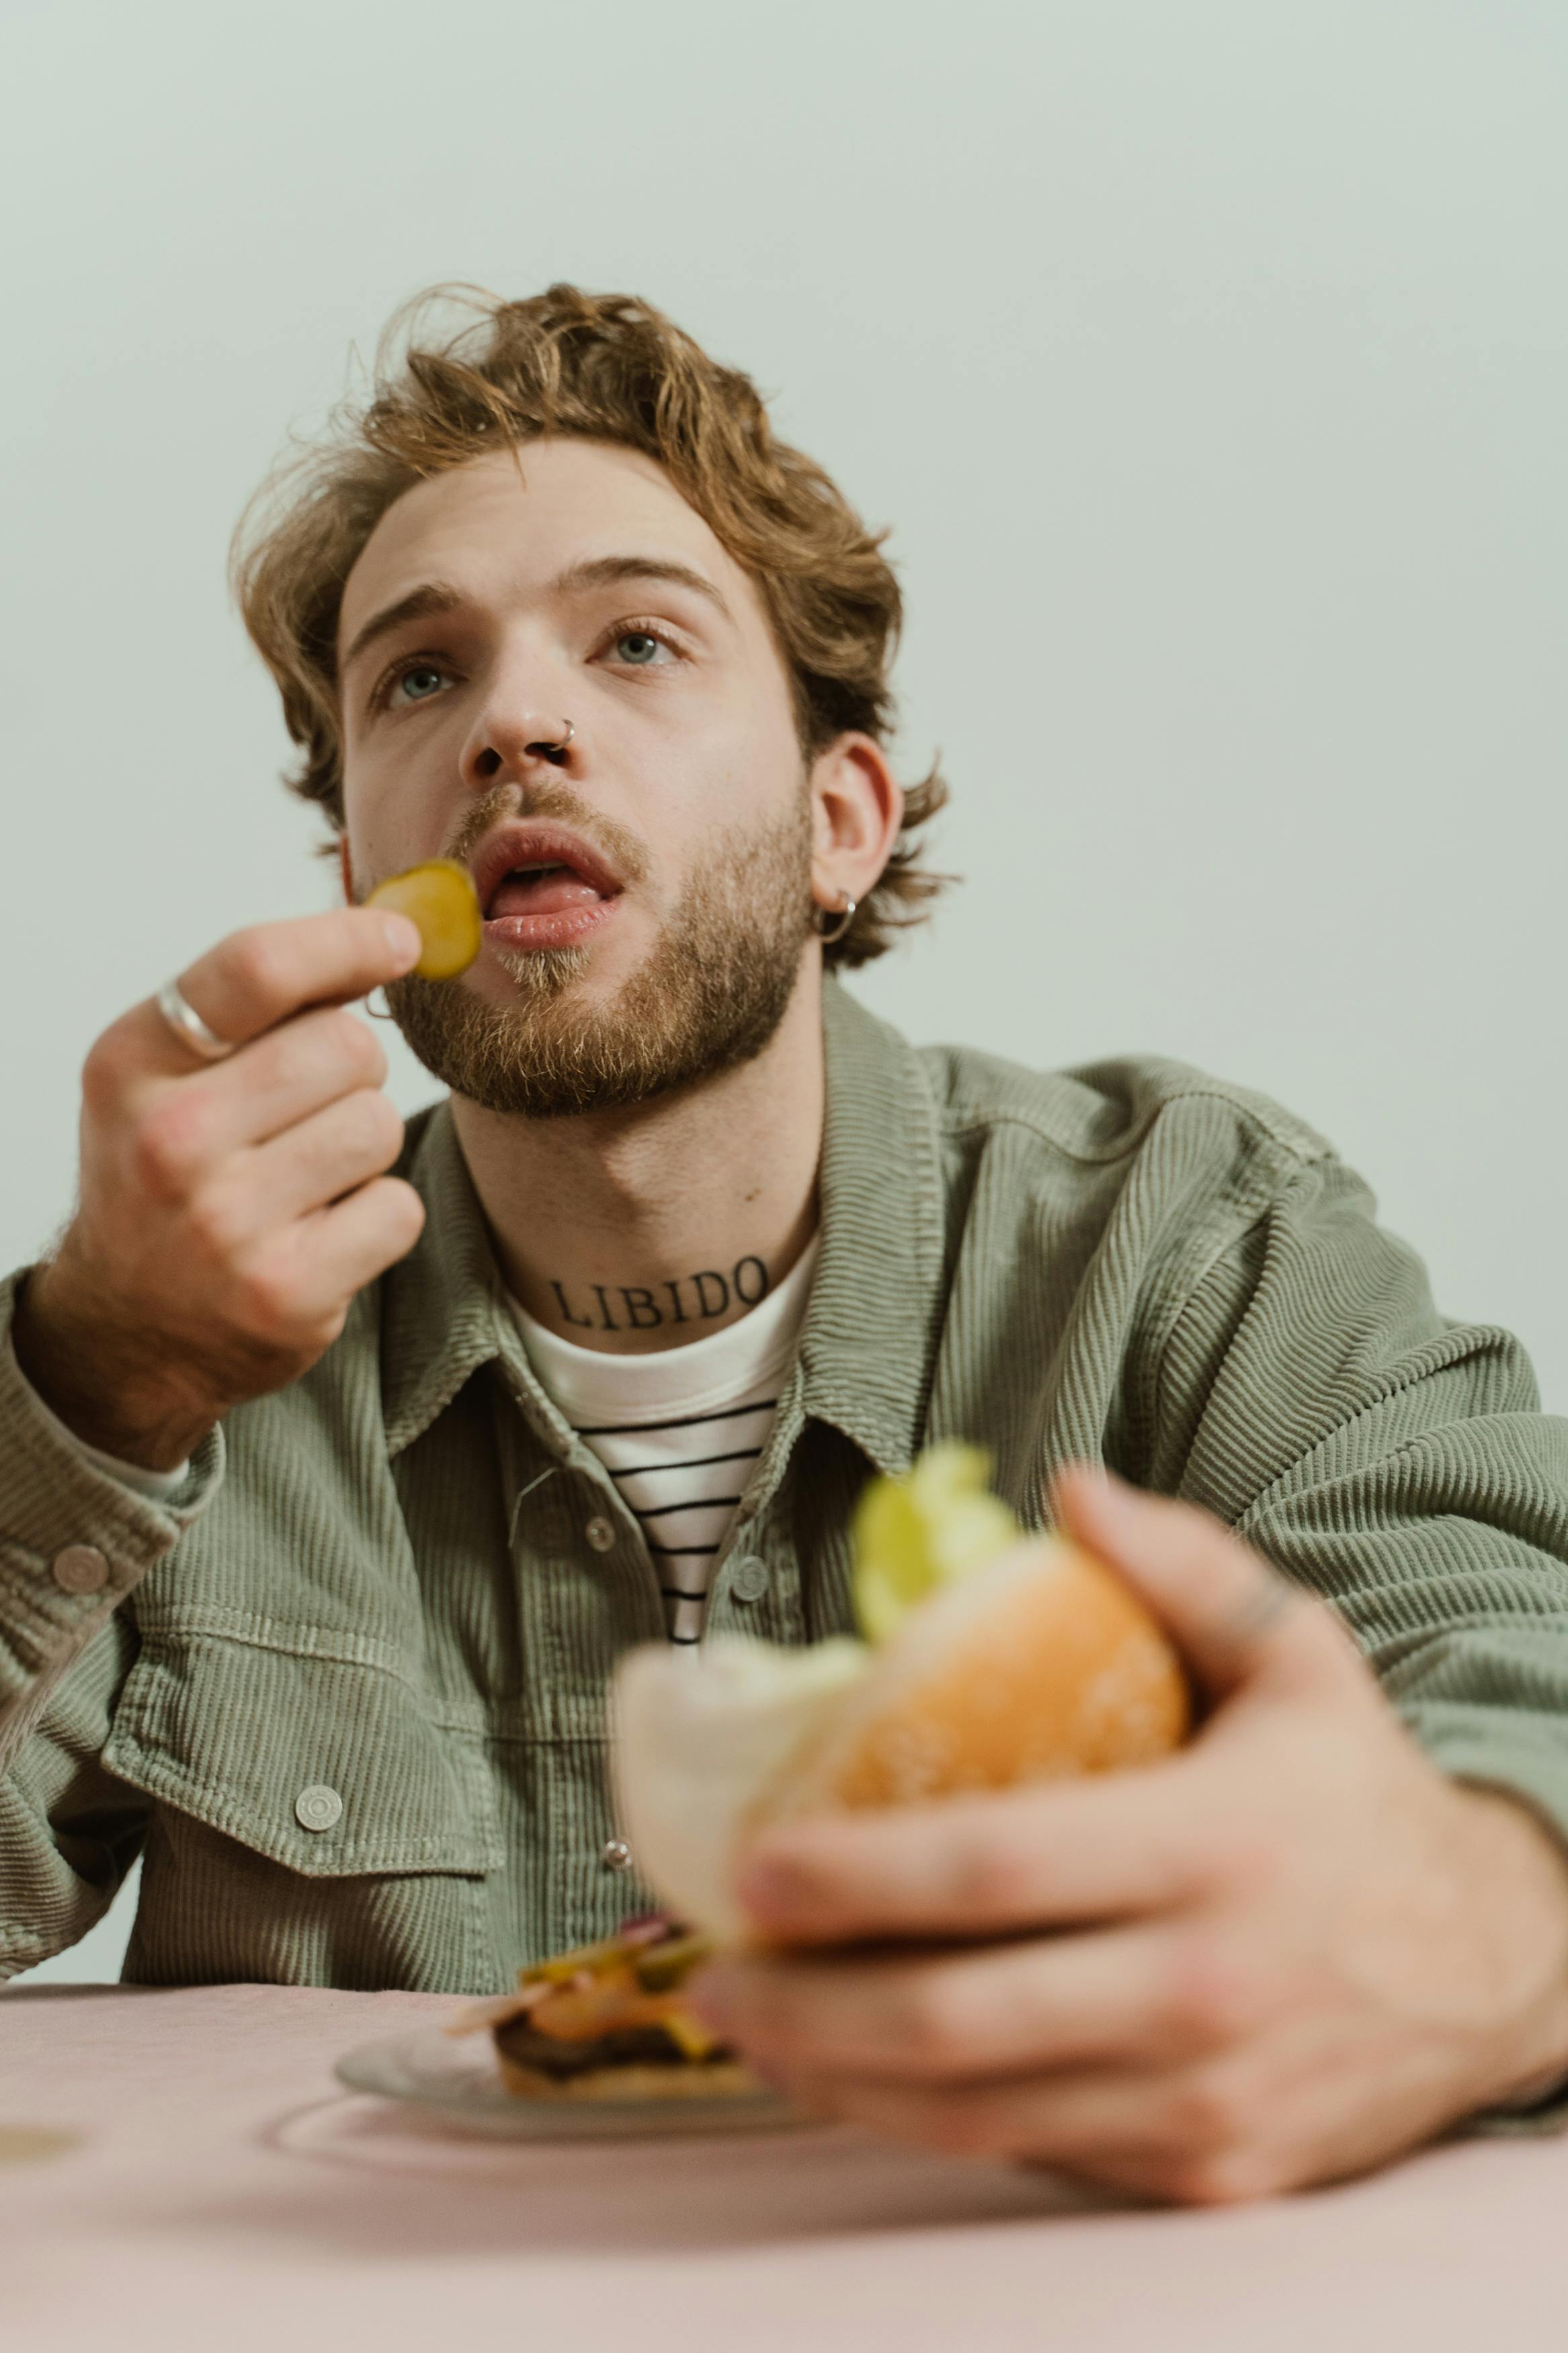 Un hombre comiendo una hamburguesa | Fuente: Shutterstock